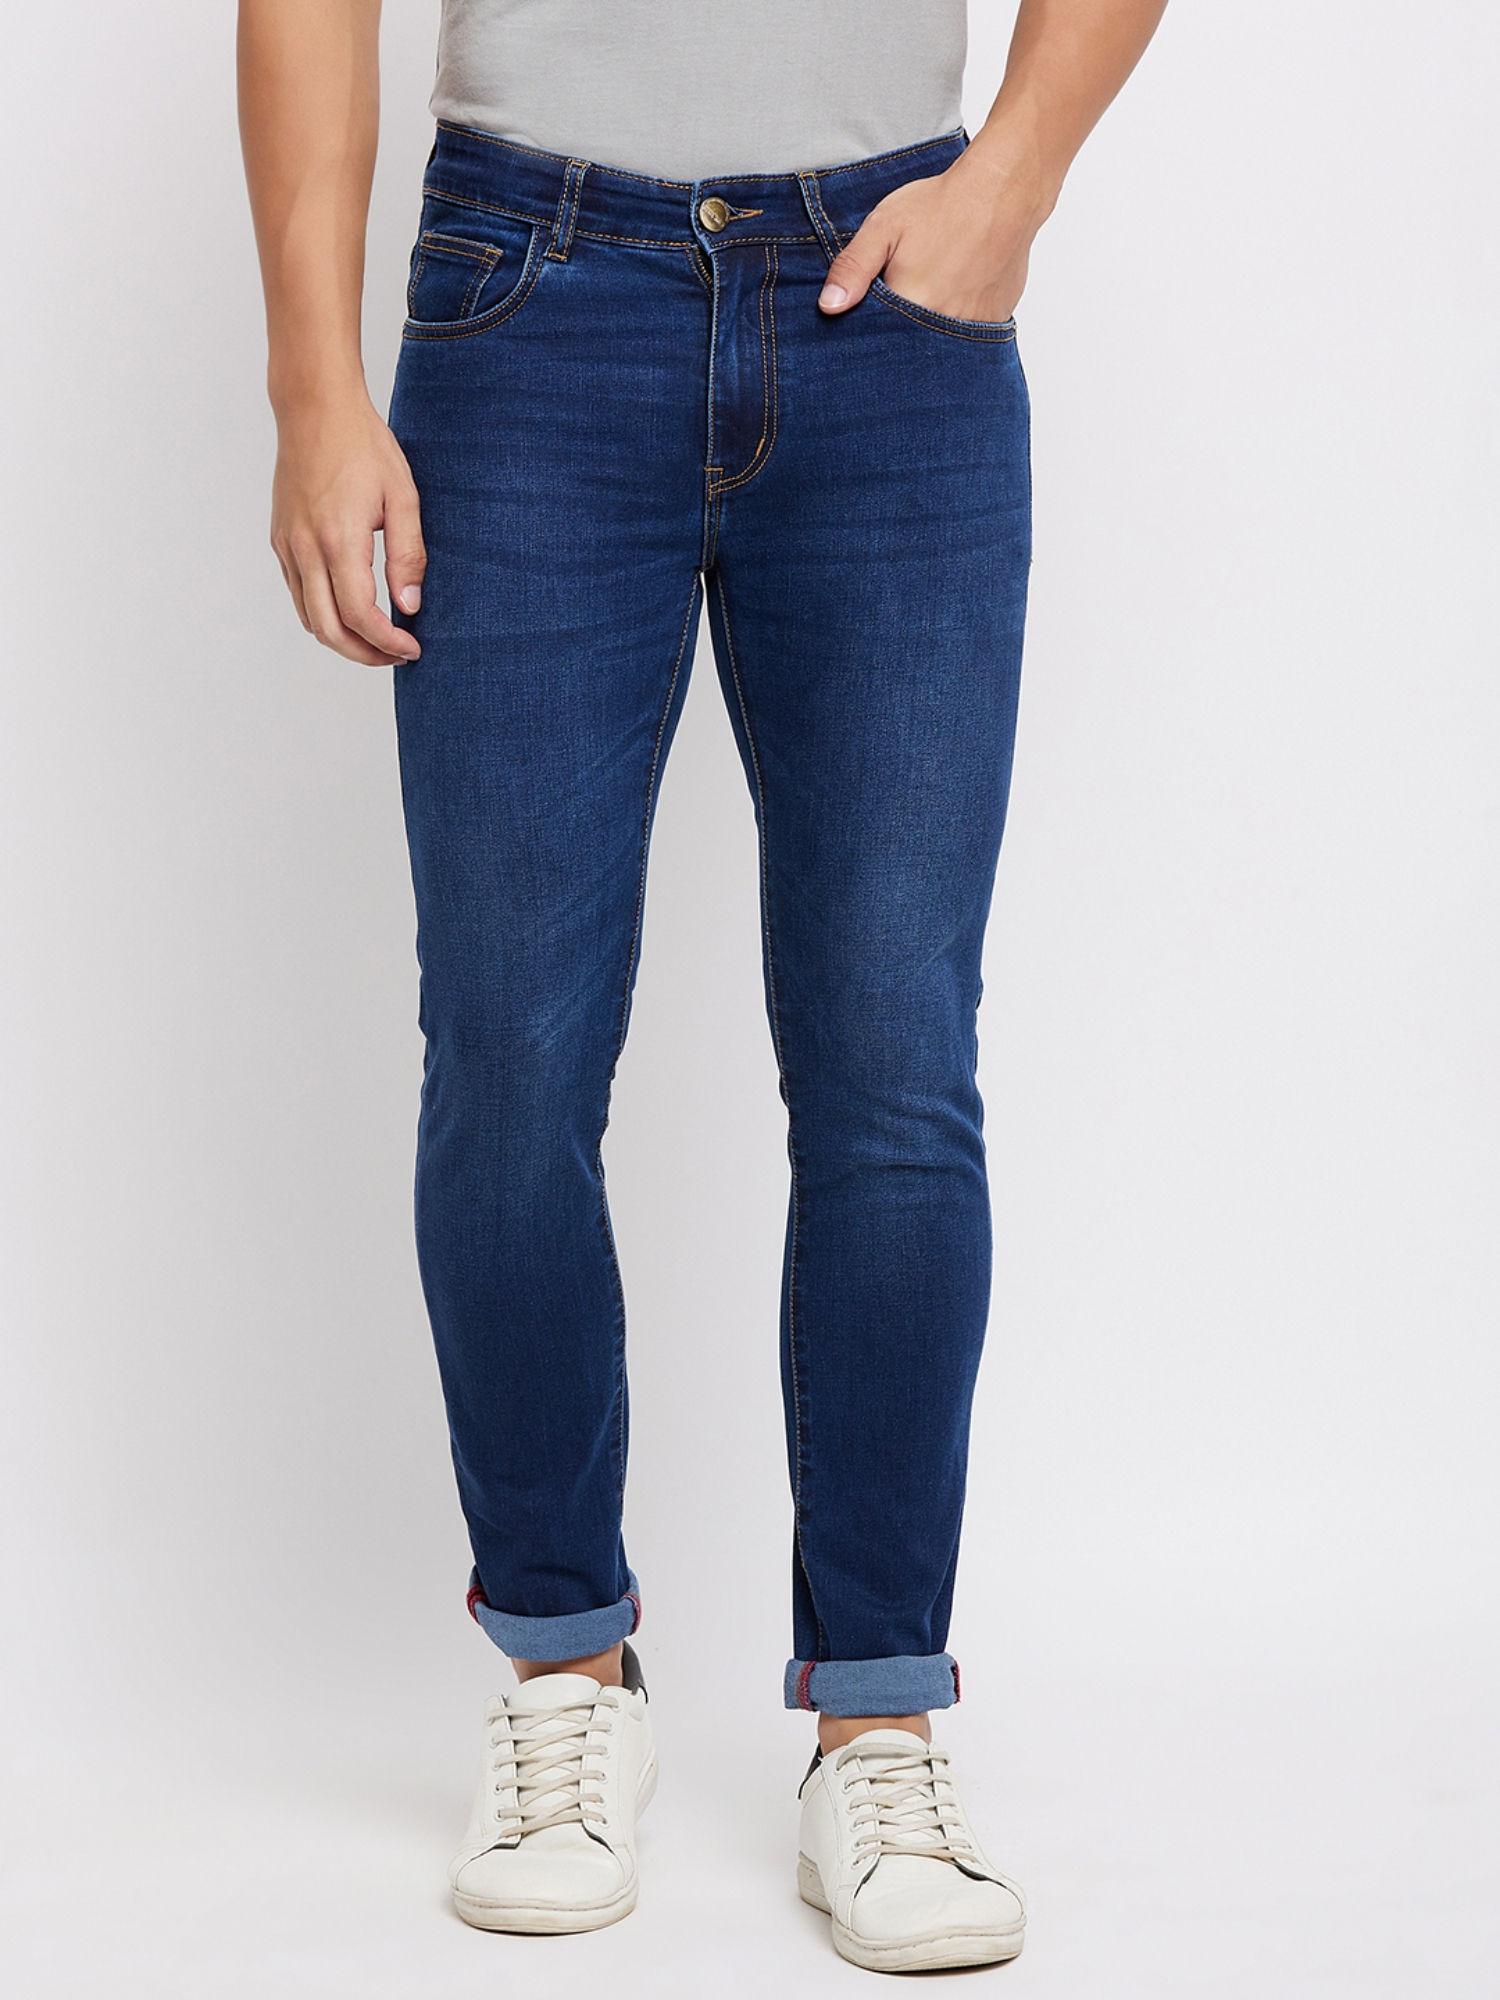 blue denim jeans